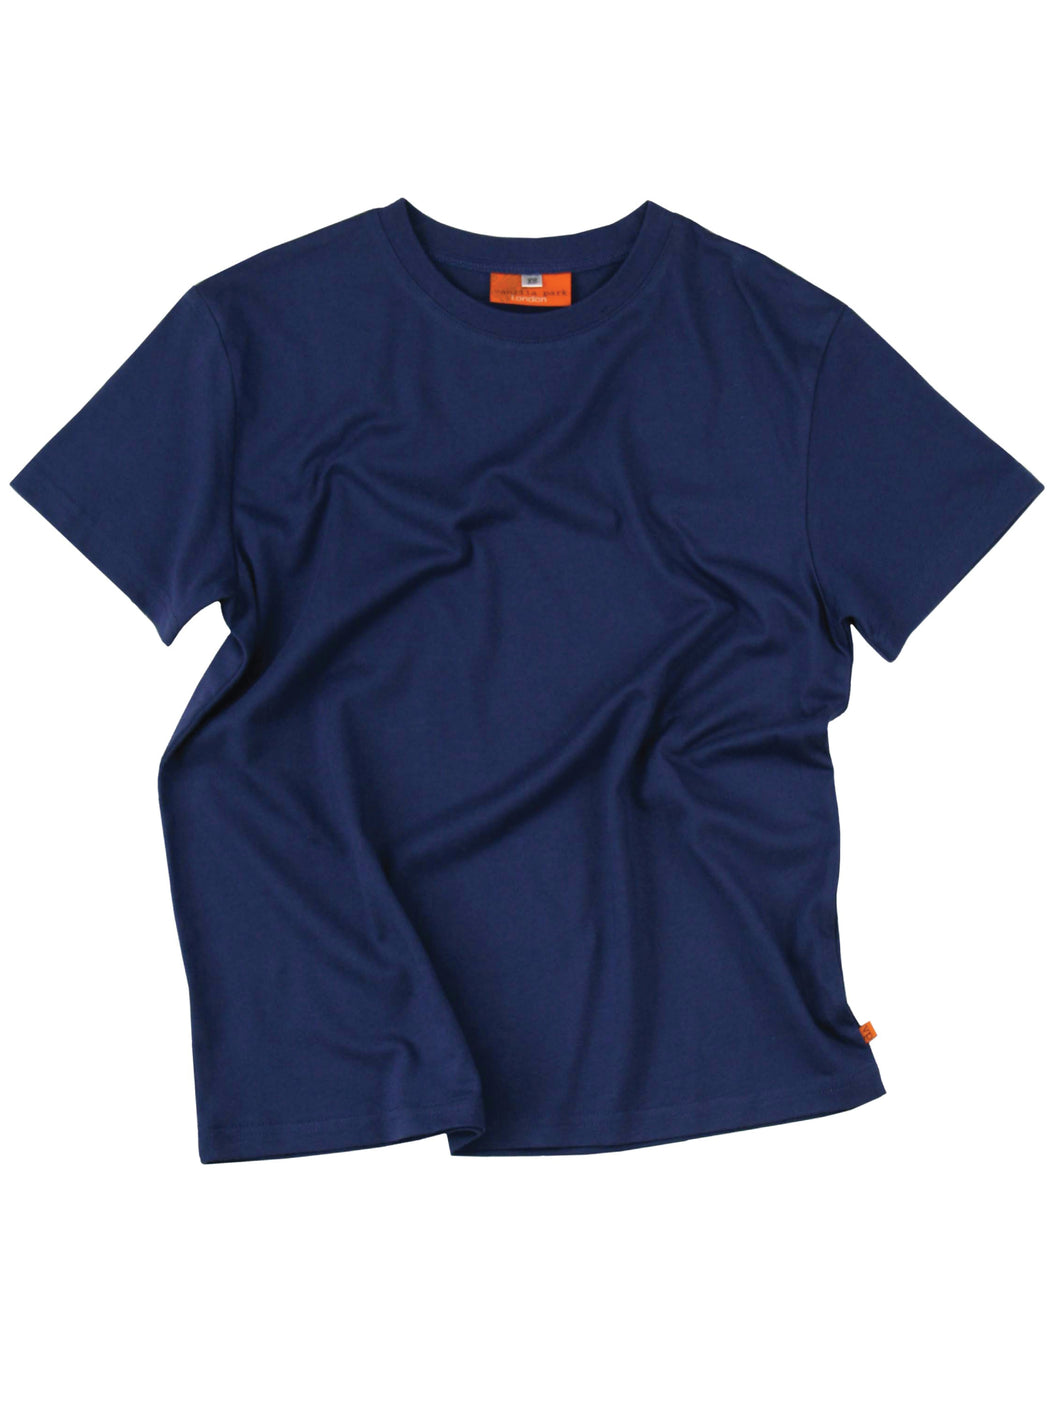 Unisex 'Kurt' Navy Short Sleeve T-shirt